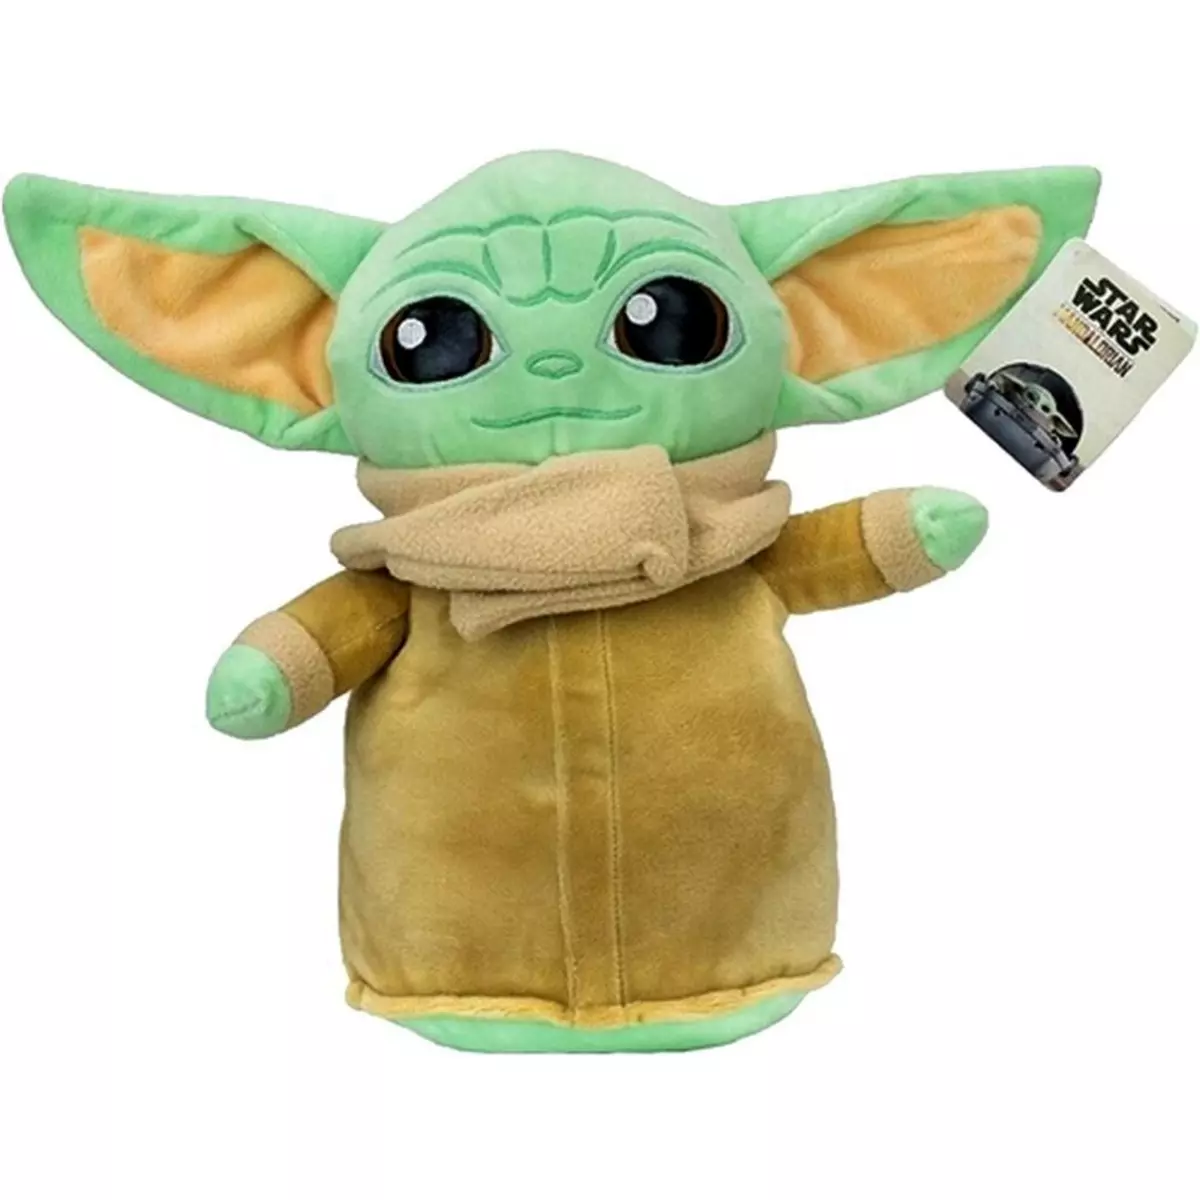 Star Wars Peluche Baby Yoda 30 cm The Mandalorian Star Wars bebe